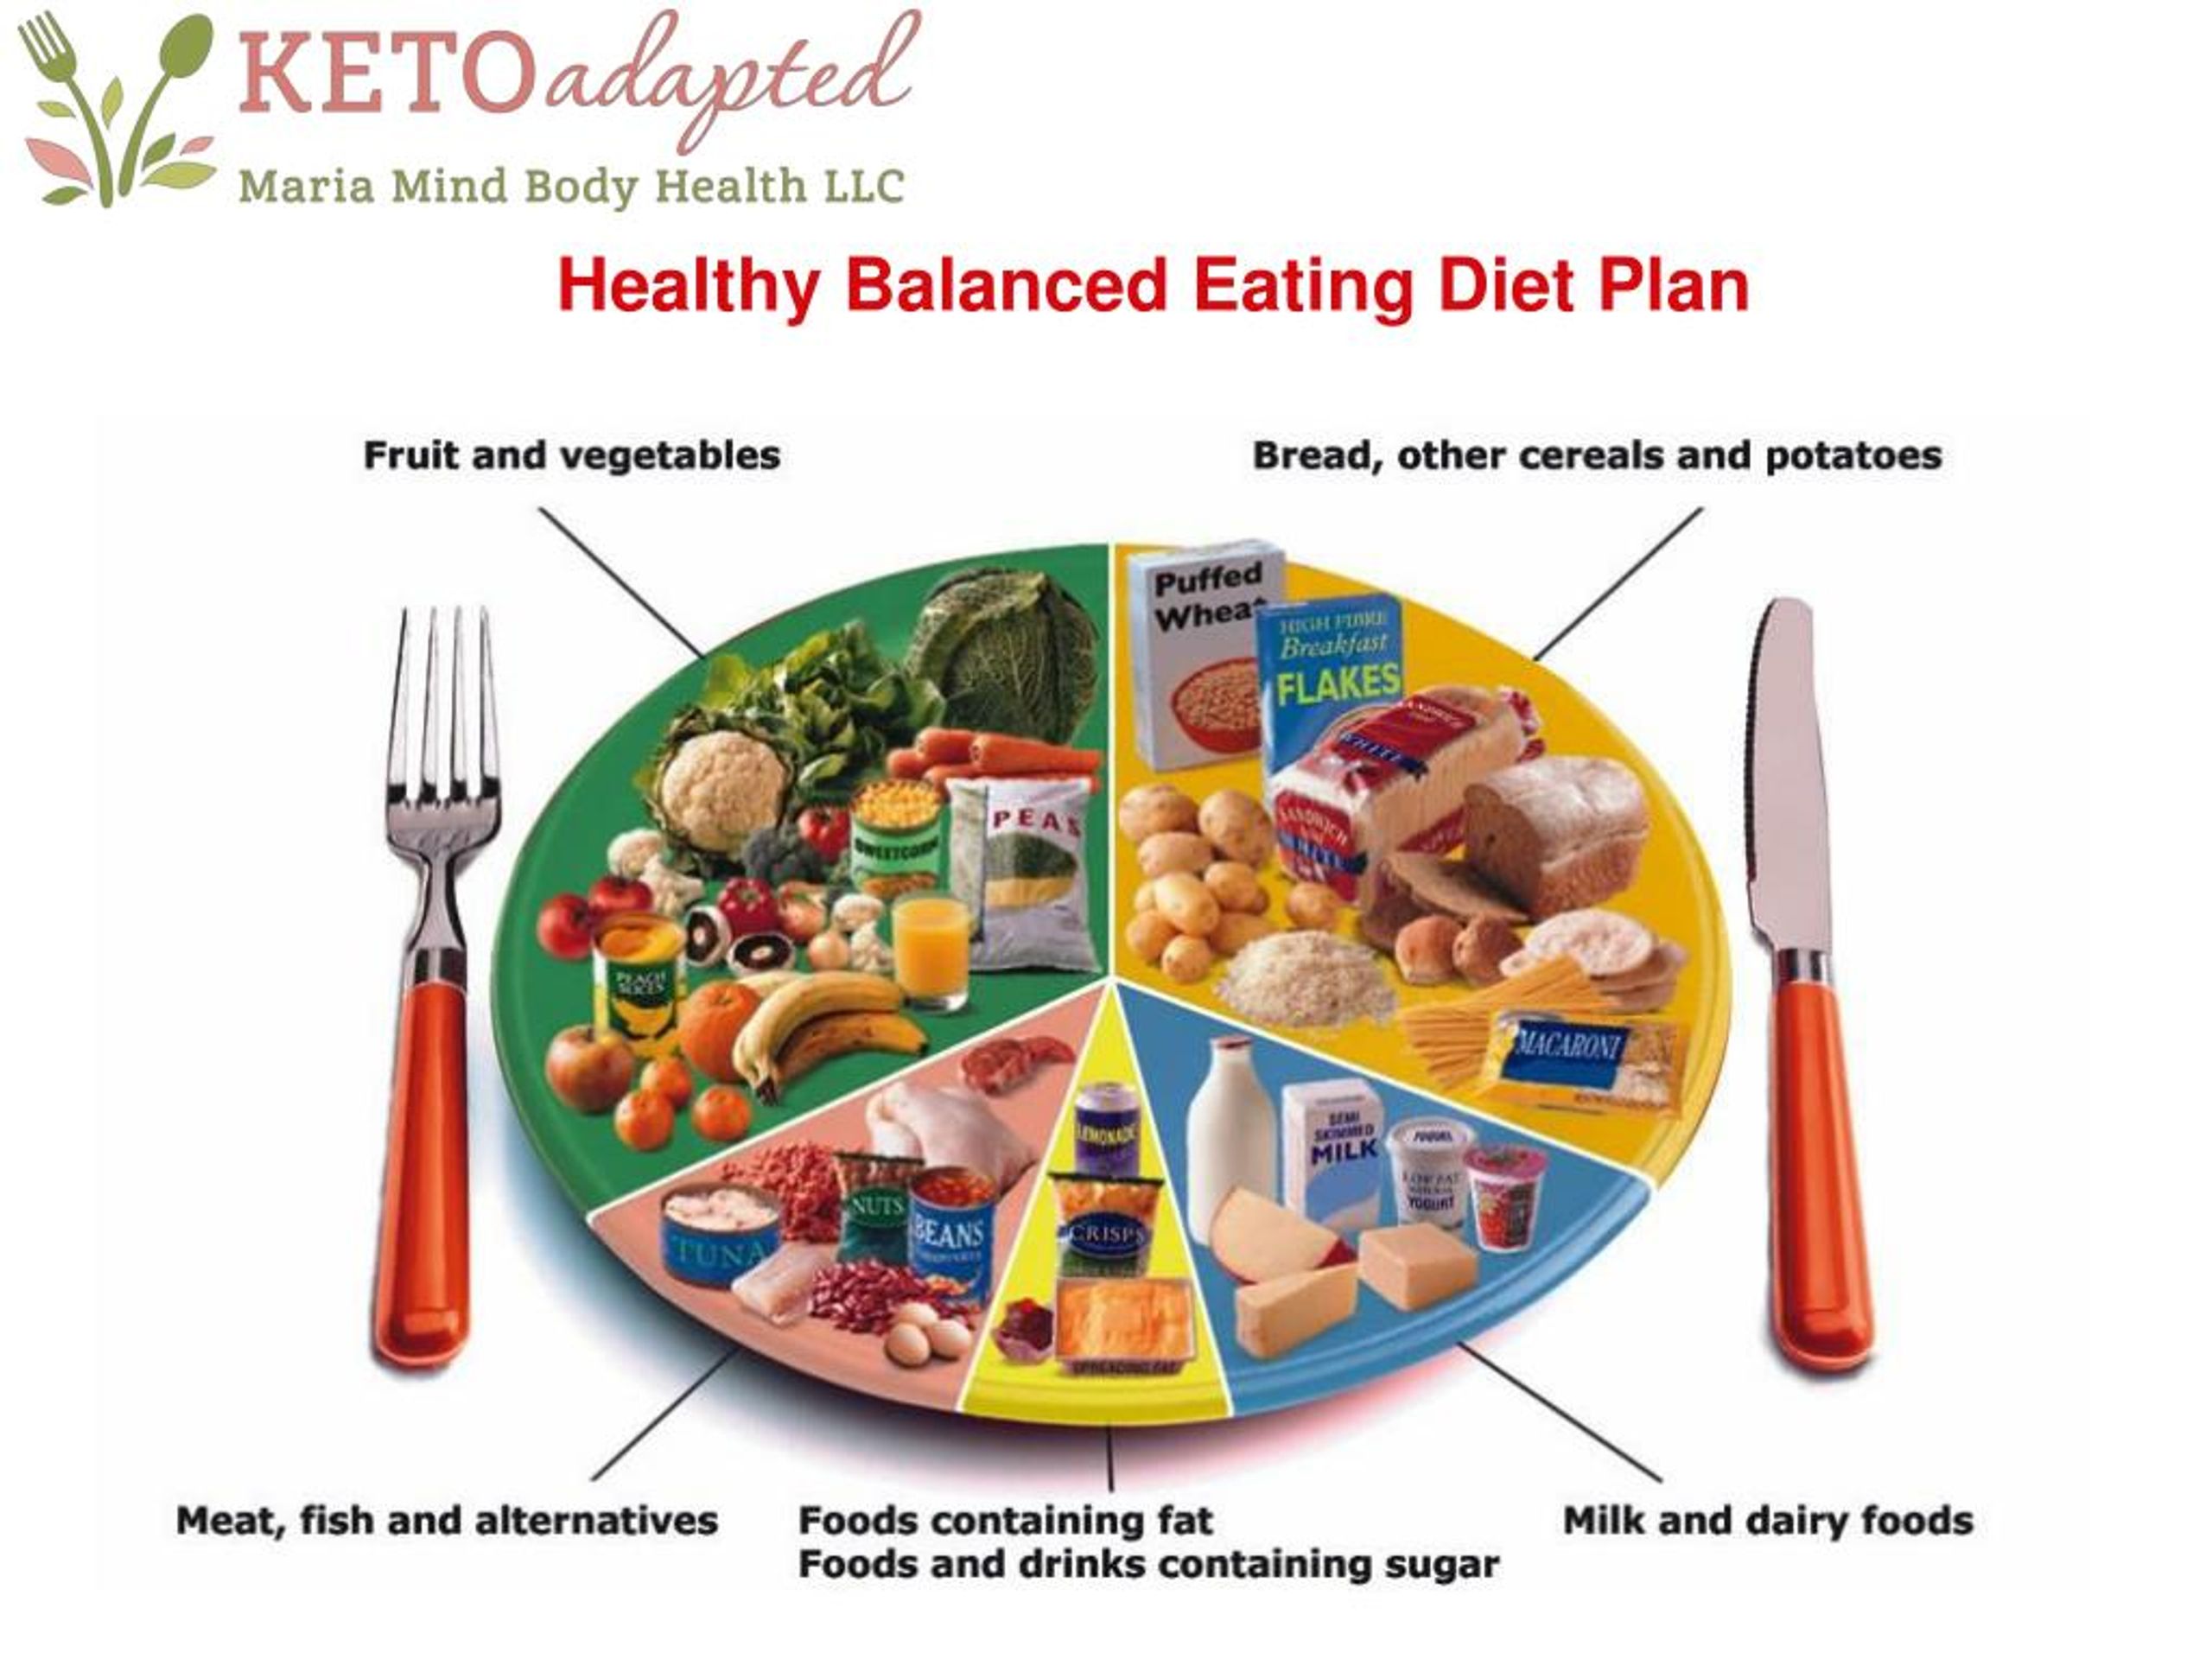 powerpoint presentation for balanced diet